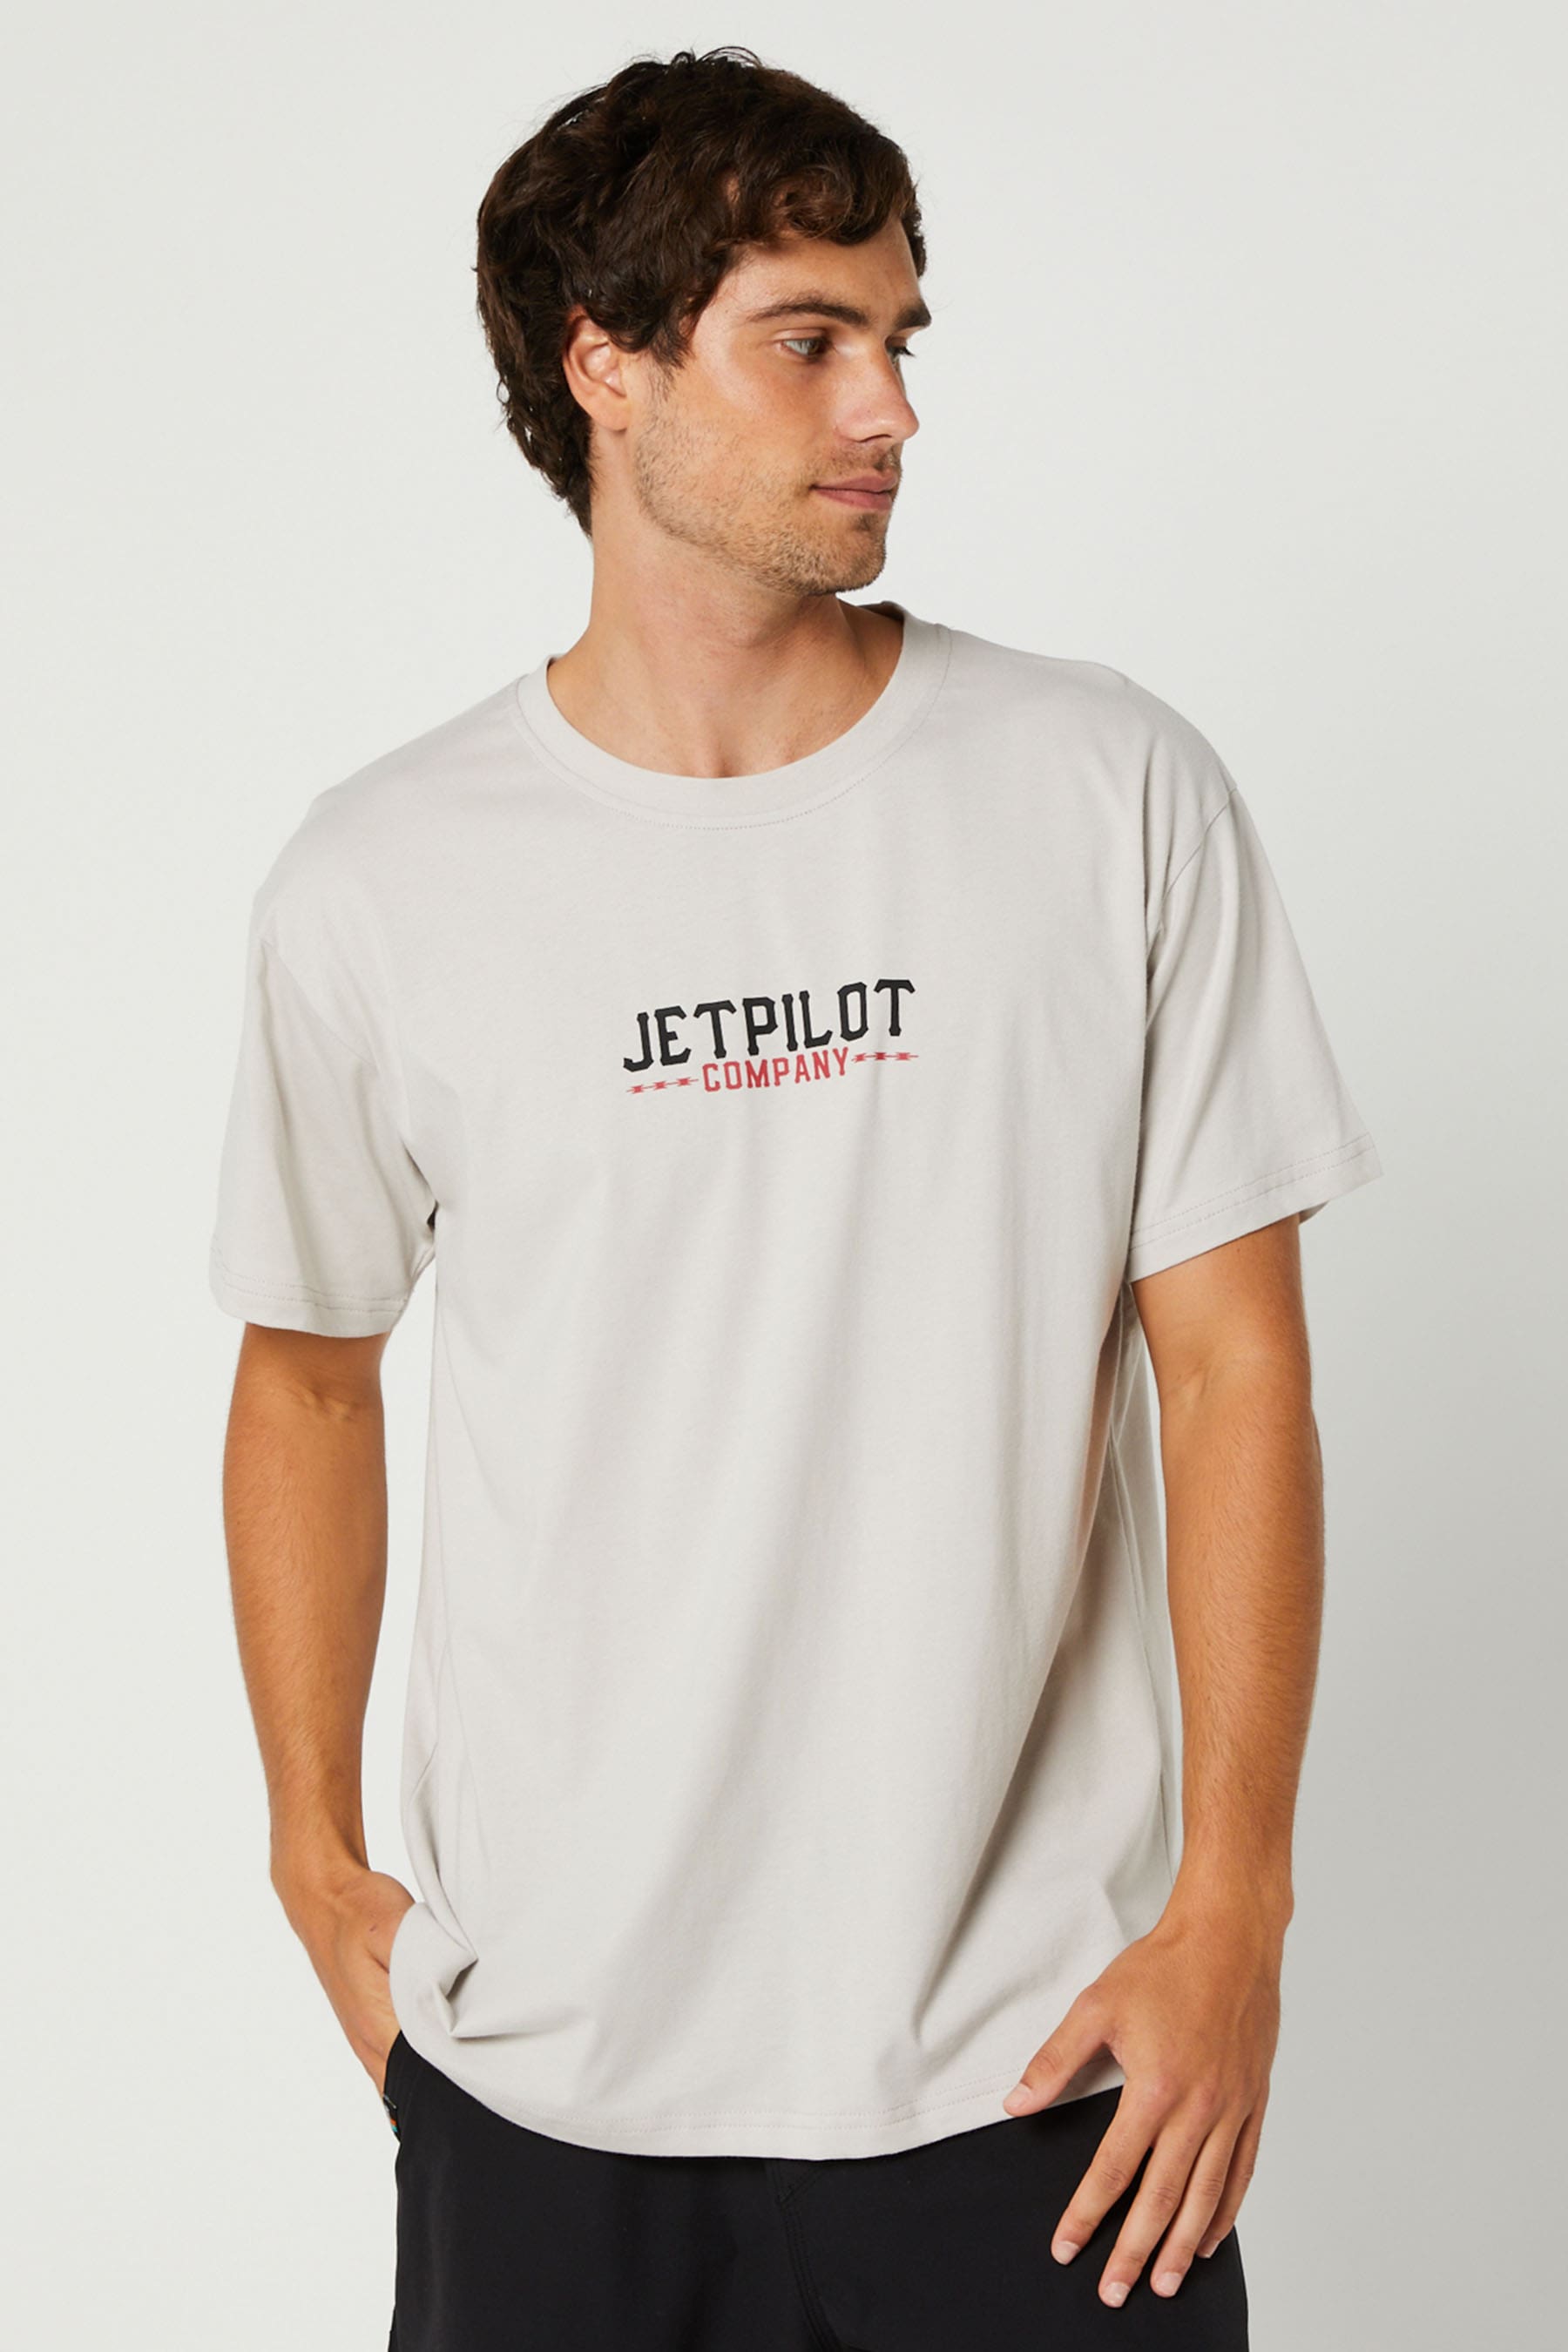 Jetpilot Hardcore Mens S/S T-Shirt - Putty